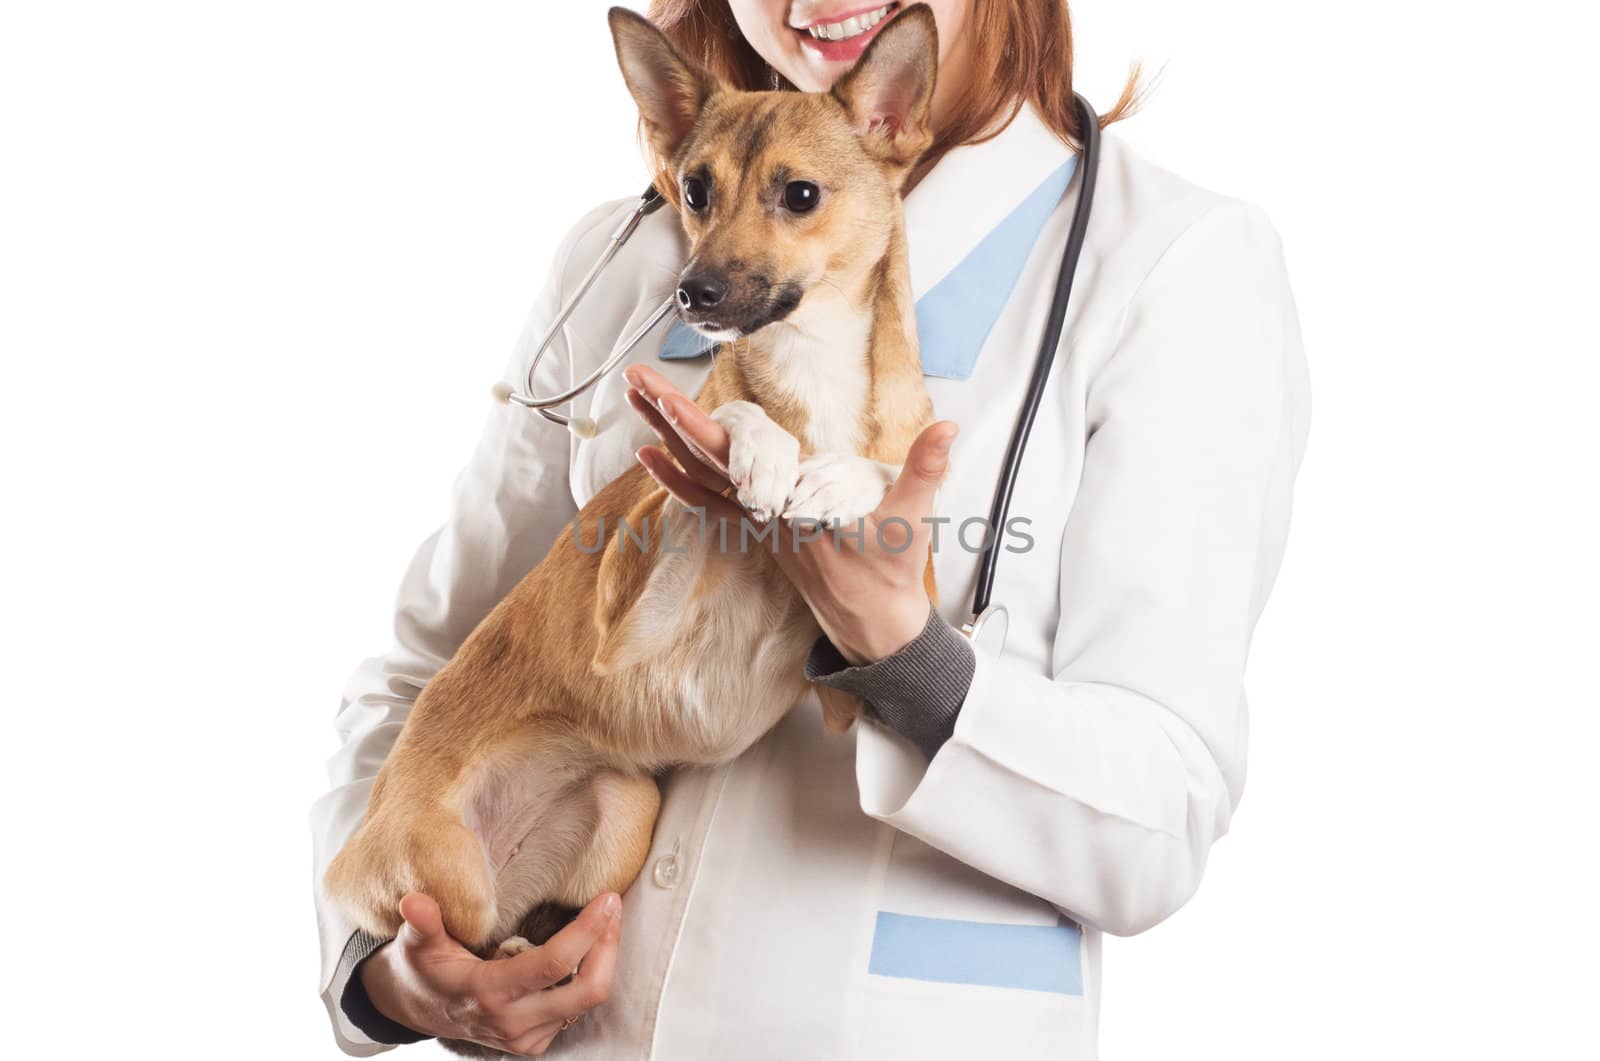 veterinarian with a dog  by gurin_oleksandr